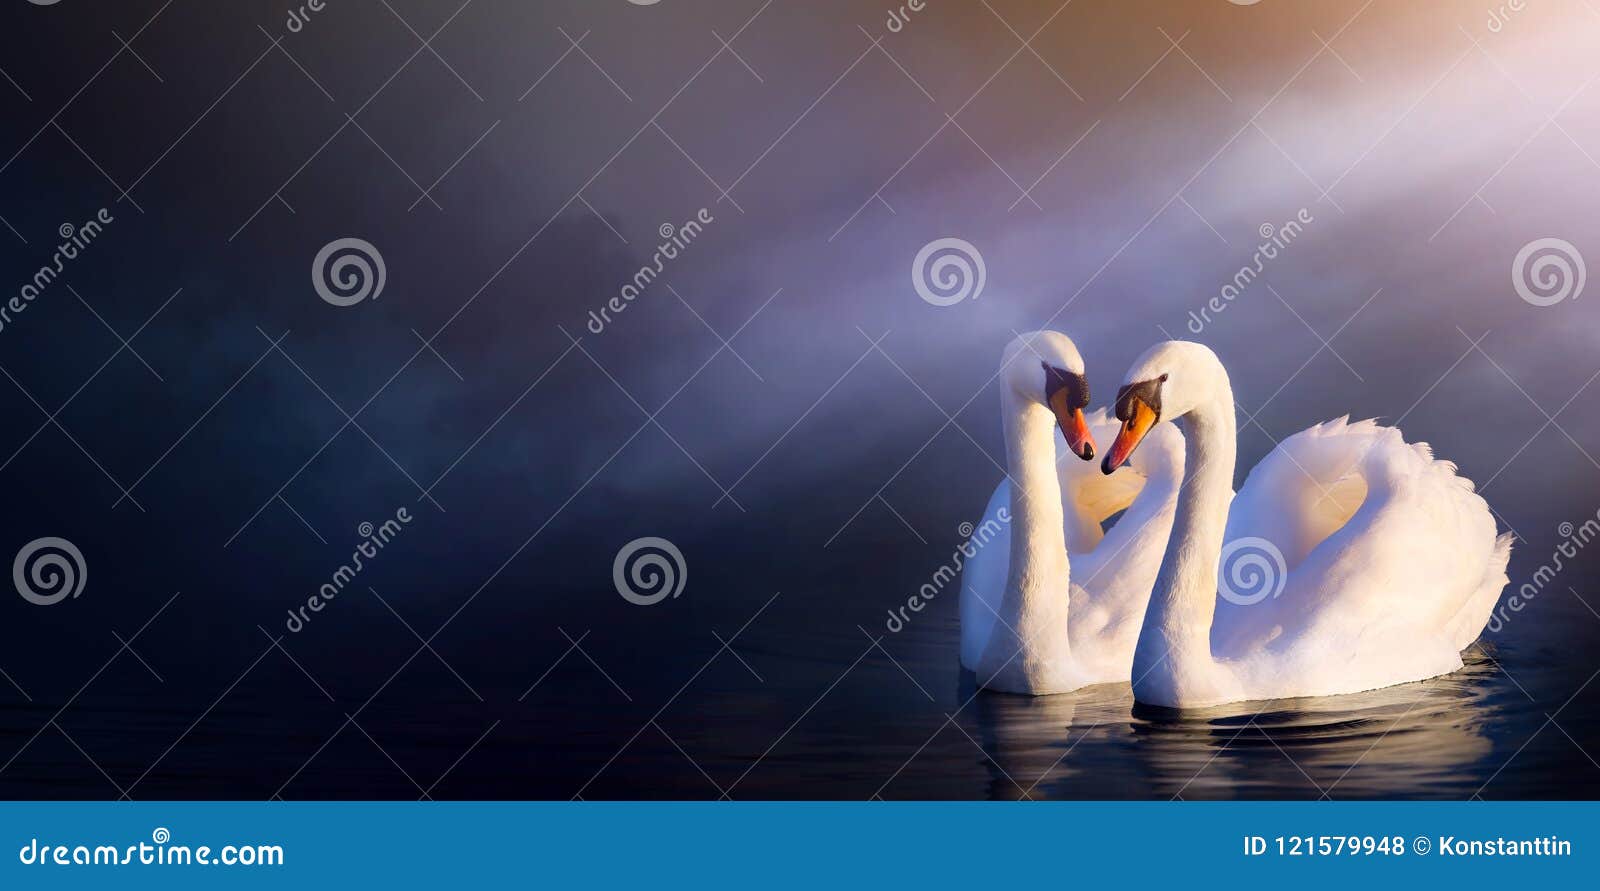 art beautiful romance landscape; love couple white swan